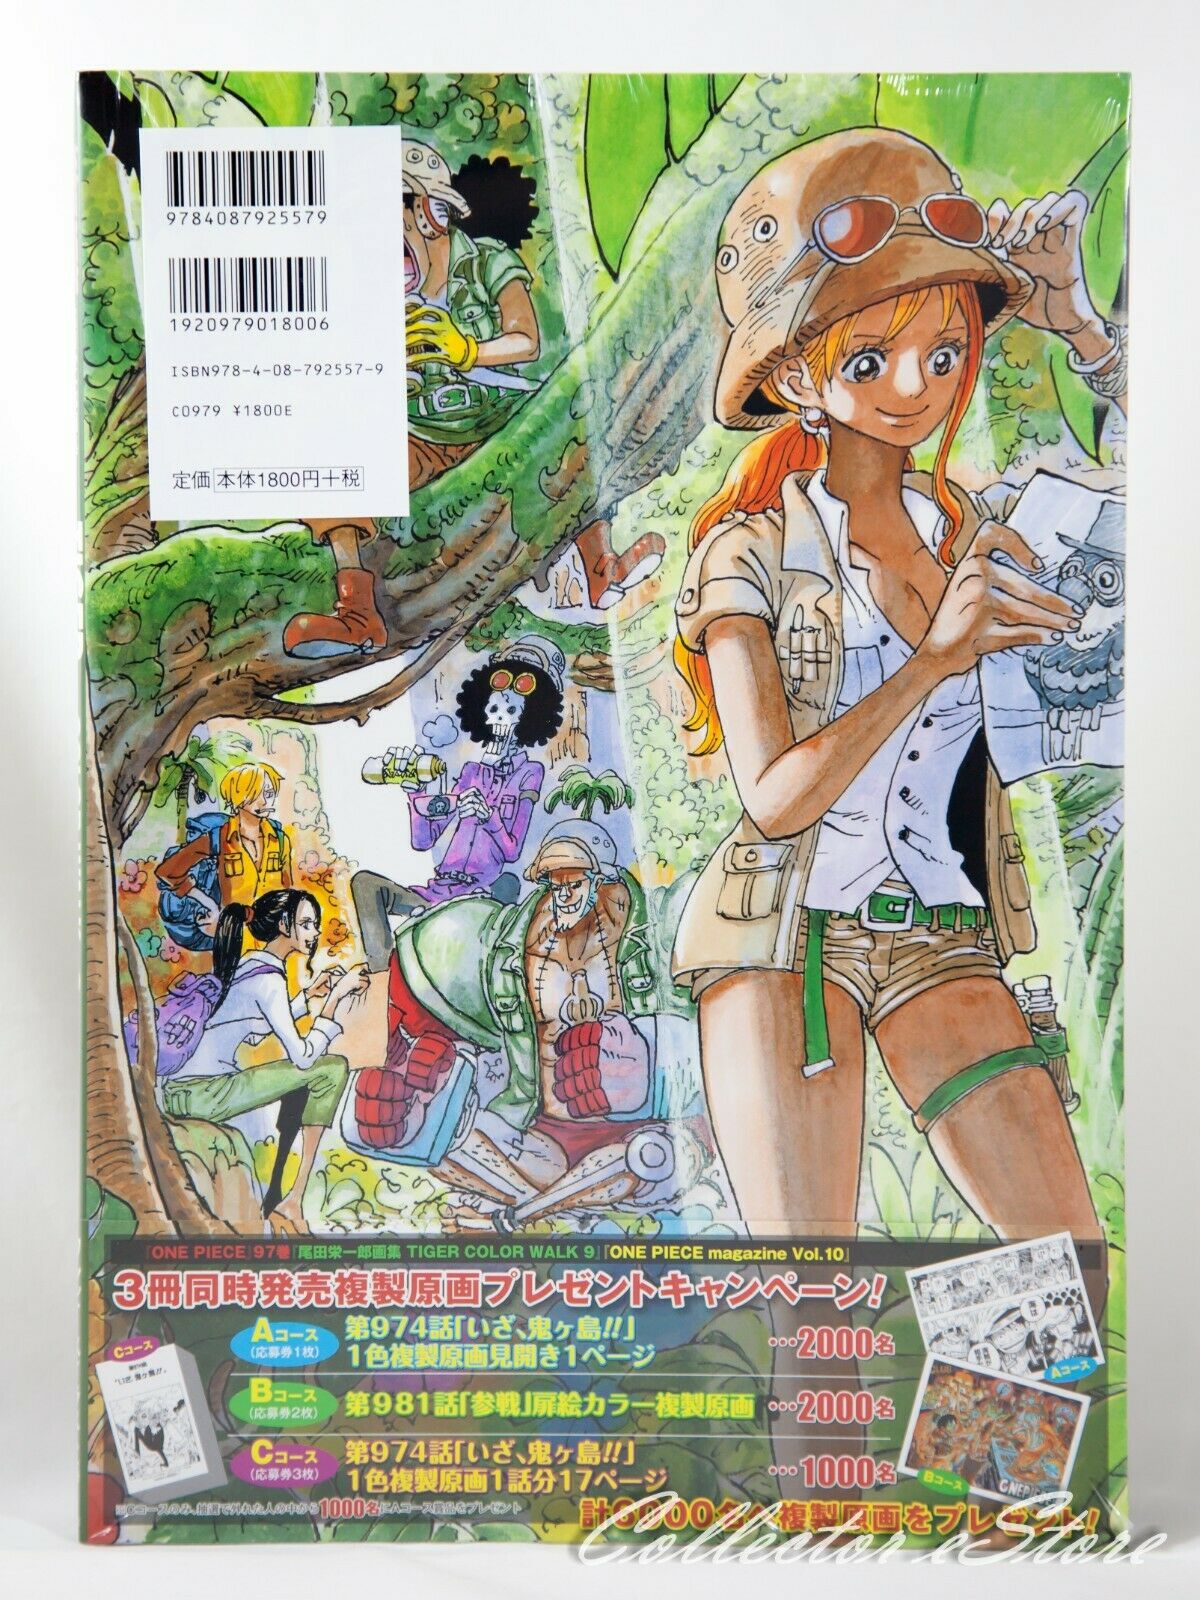 3 7 Days Jp One Piece Color Walk Vol 9 Tiger Eiichiro Oda Illustra J Culture Shop